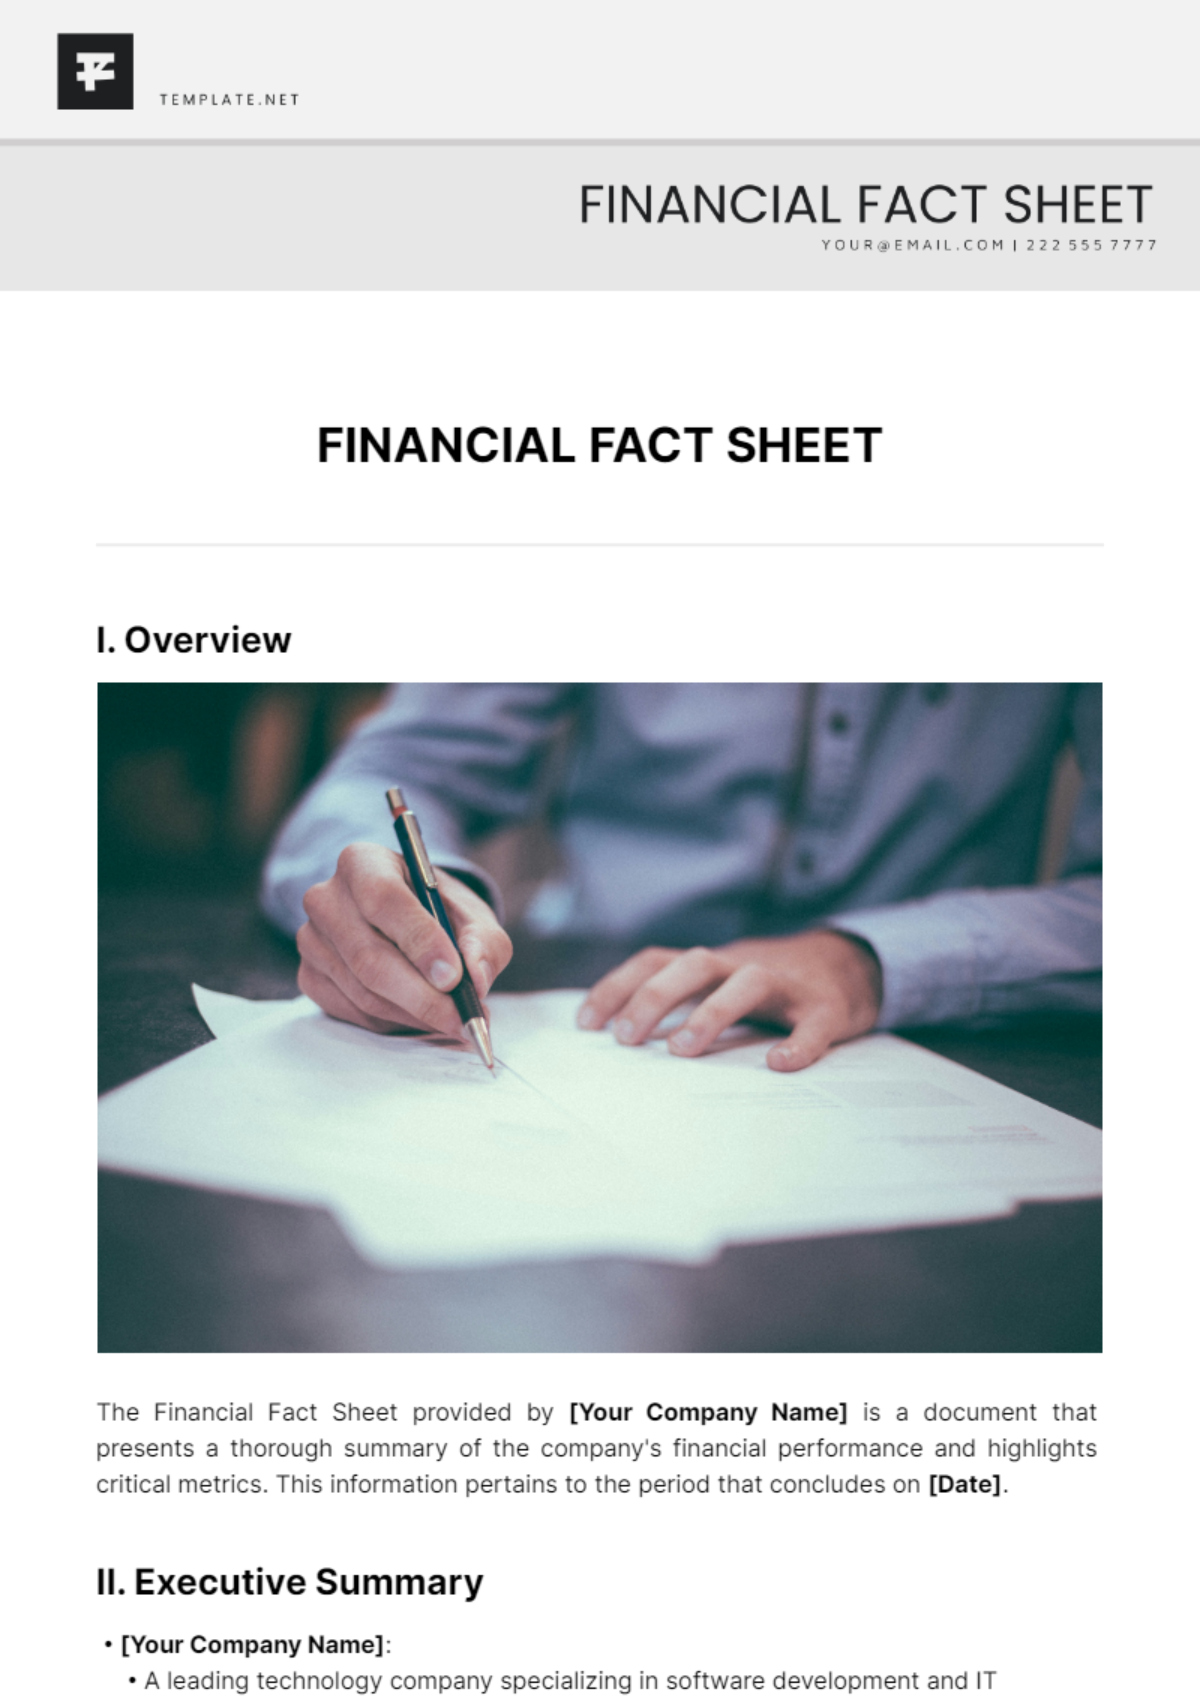 Free Financial Fact Sheet Template